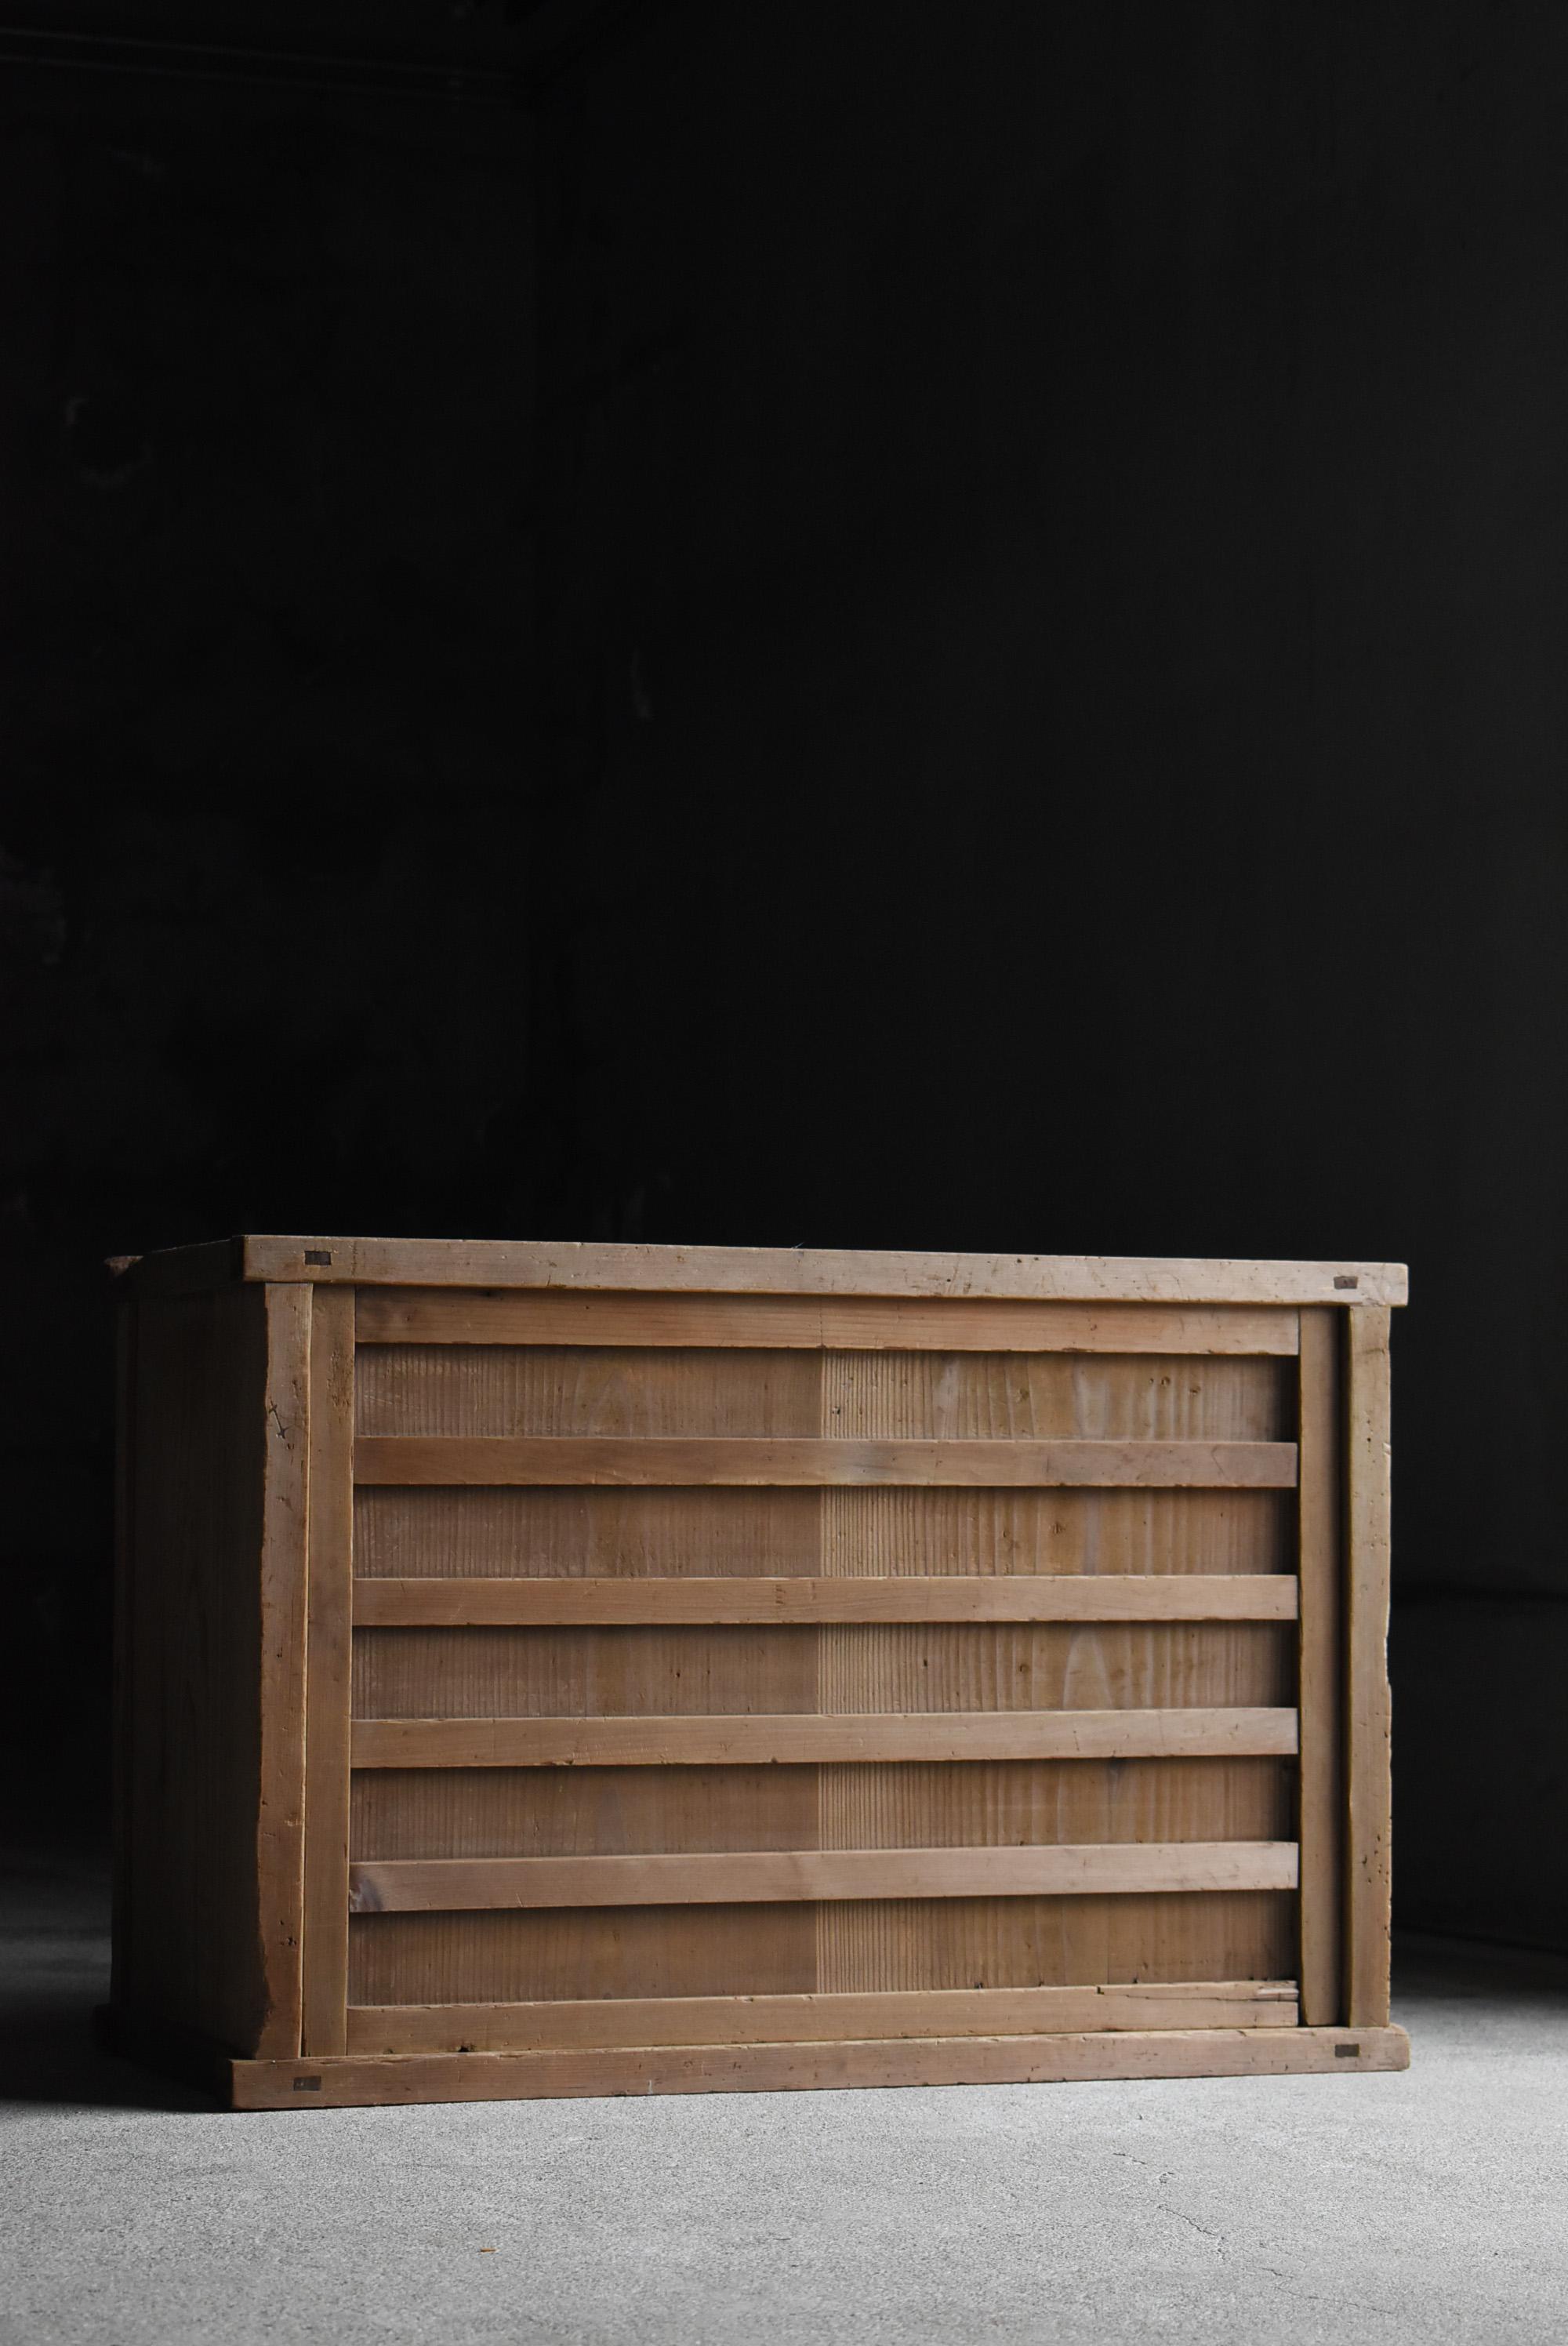 1860s-1920s Japanese antique tansu chest of drawer cabinet wabisabi wabi-sabi

Size: W 875, D 425, H 585
Meiji period.